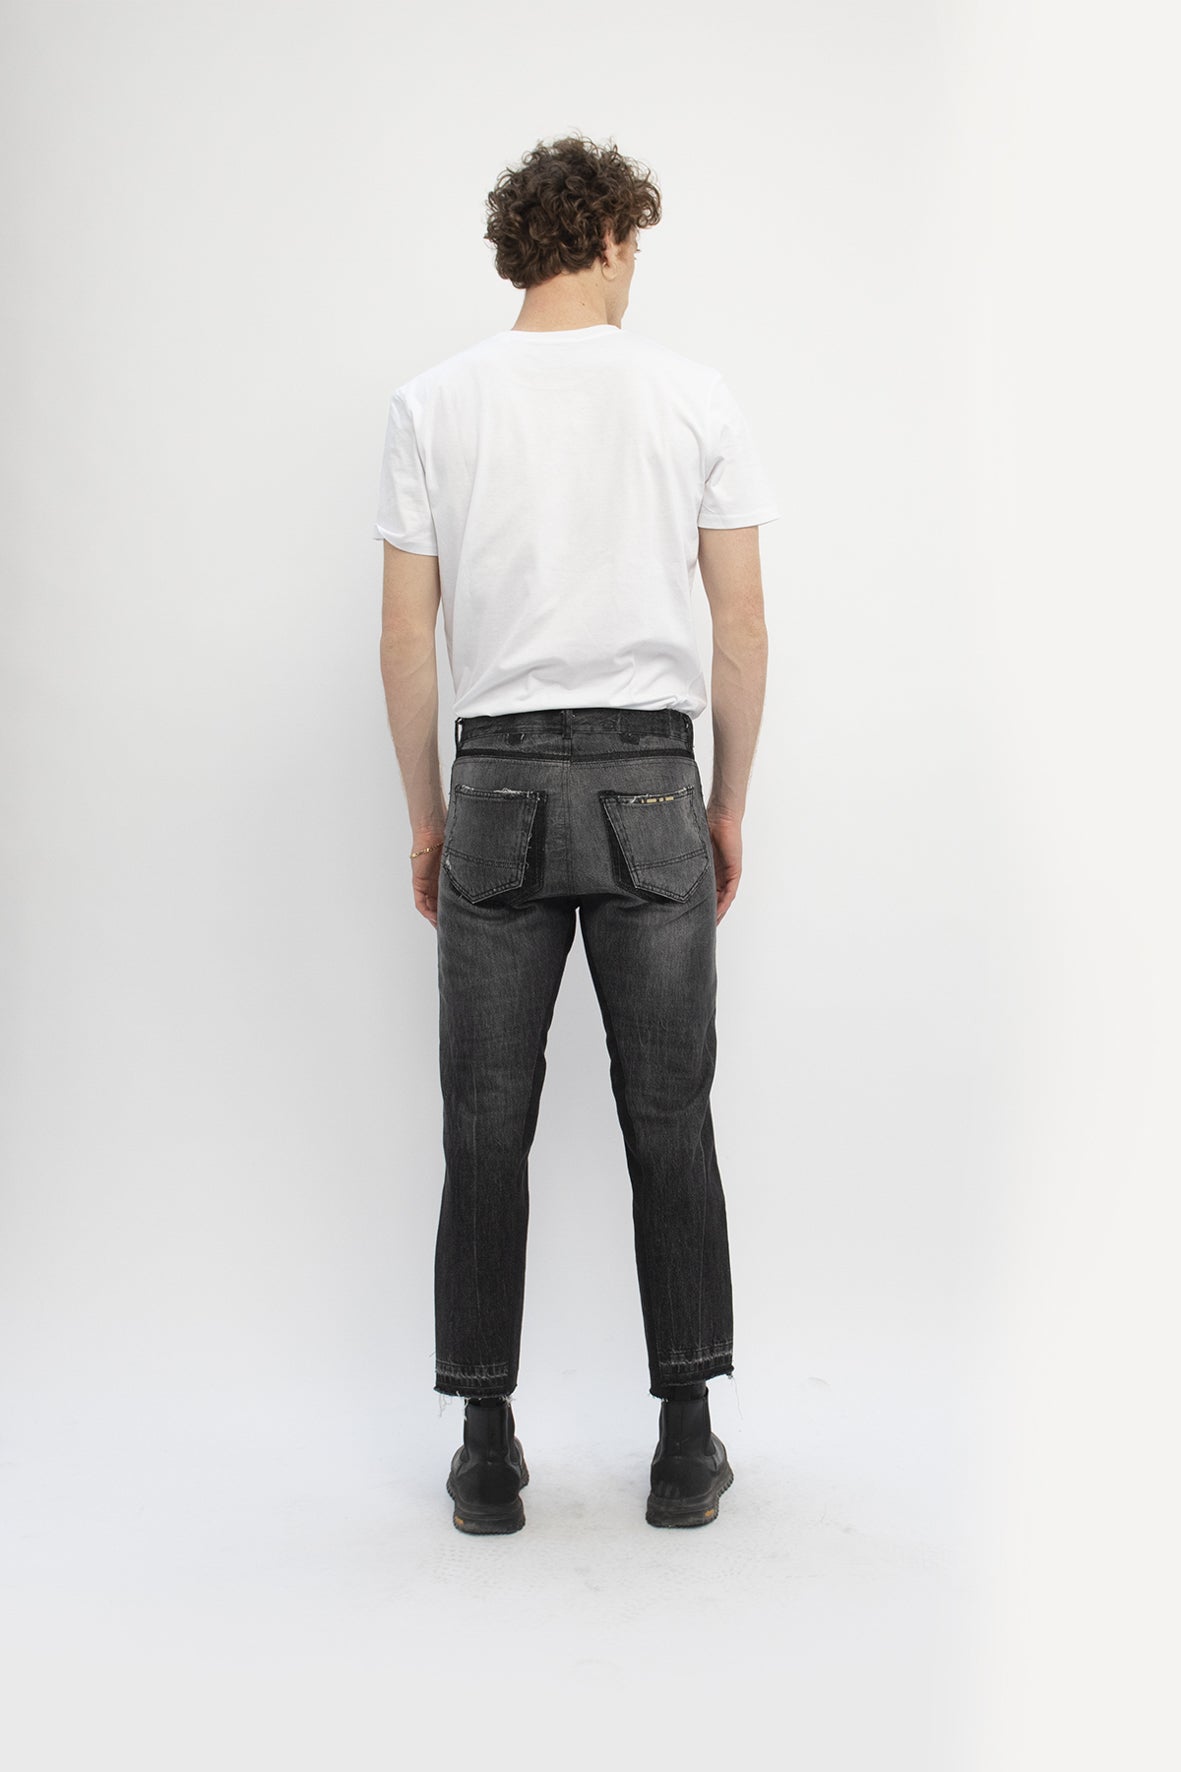 Apollo carrot jean unisex - upcycled garment